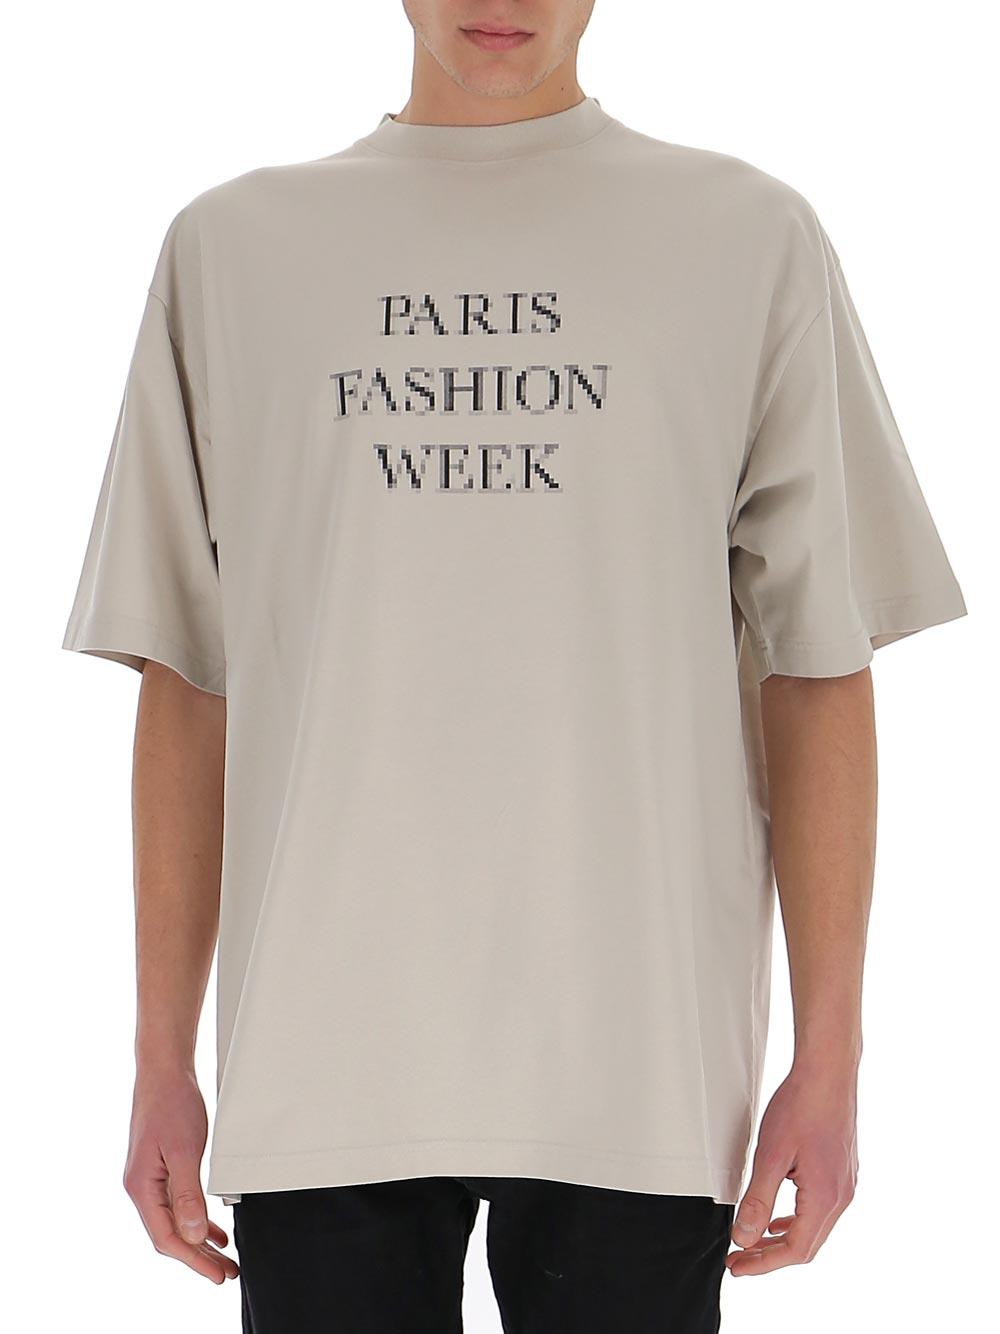 Balenciaga Cotton Paris Fashion Week Print T-shirt in Grey (Gray) for Men |  Lyst